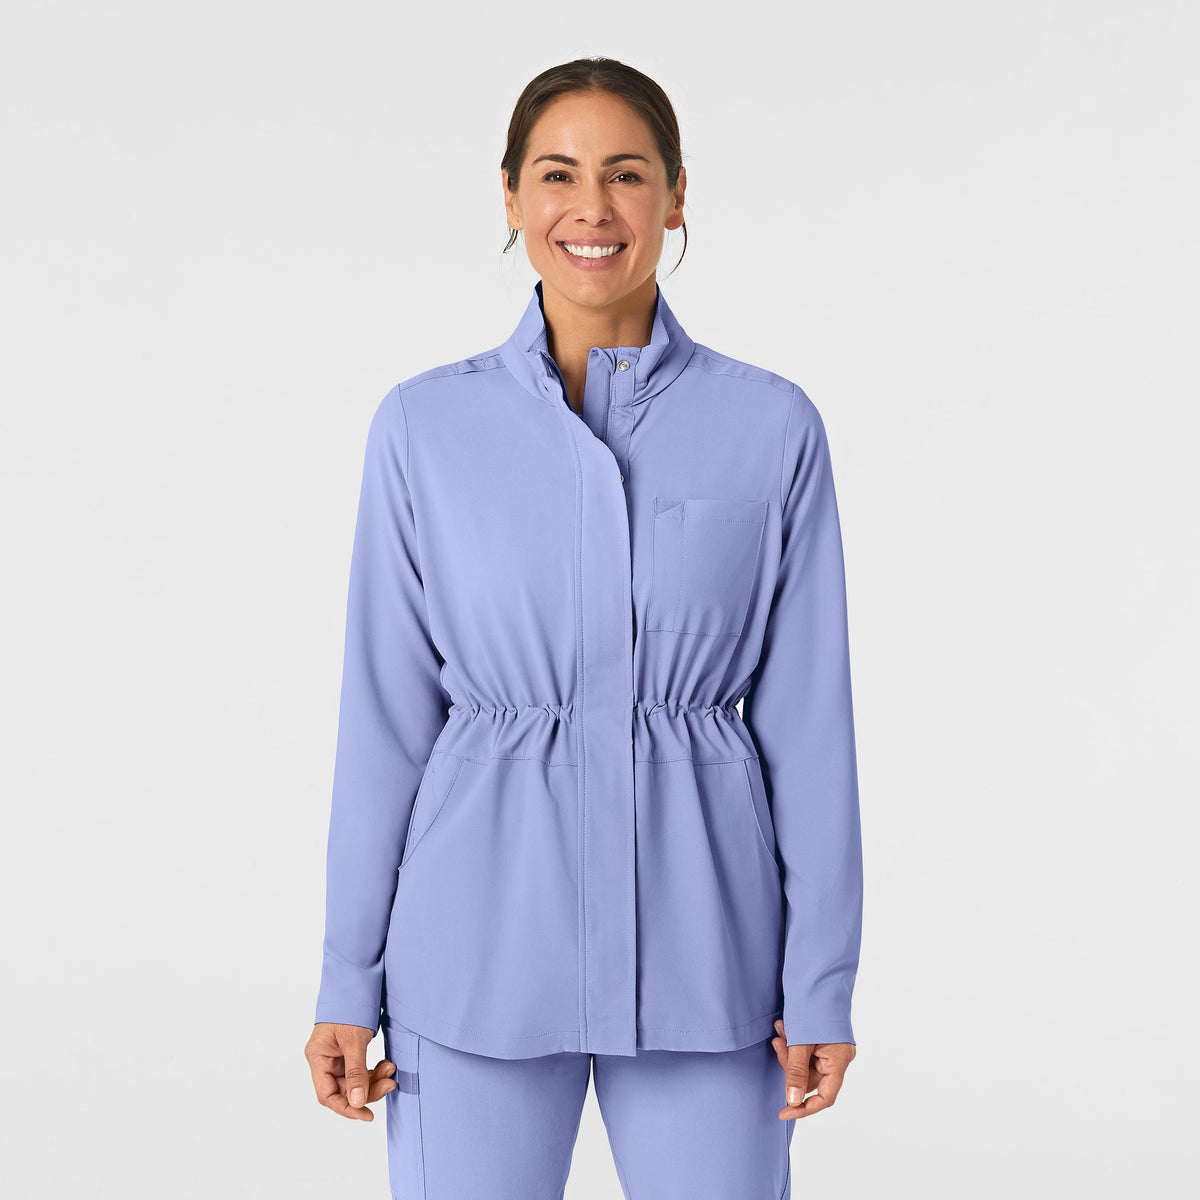 RENEW Women's Convertible Hood Fashion Jacket - Ceil Blue